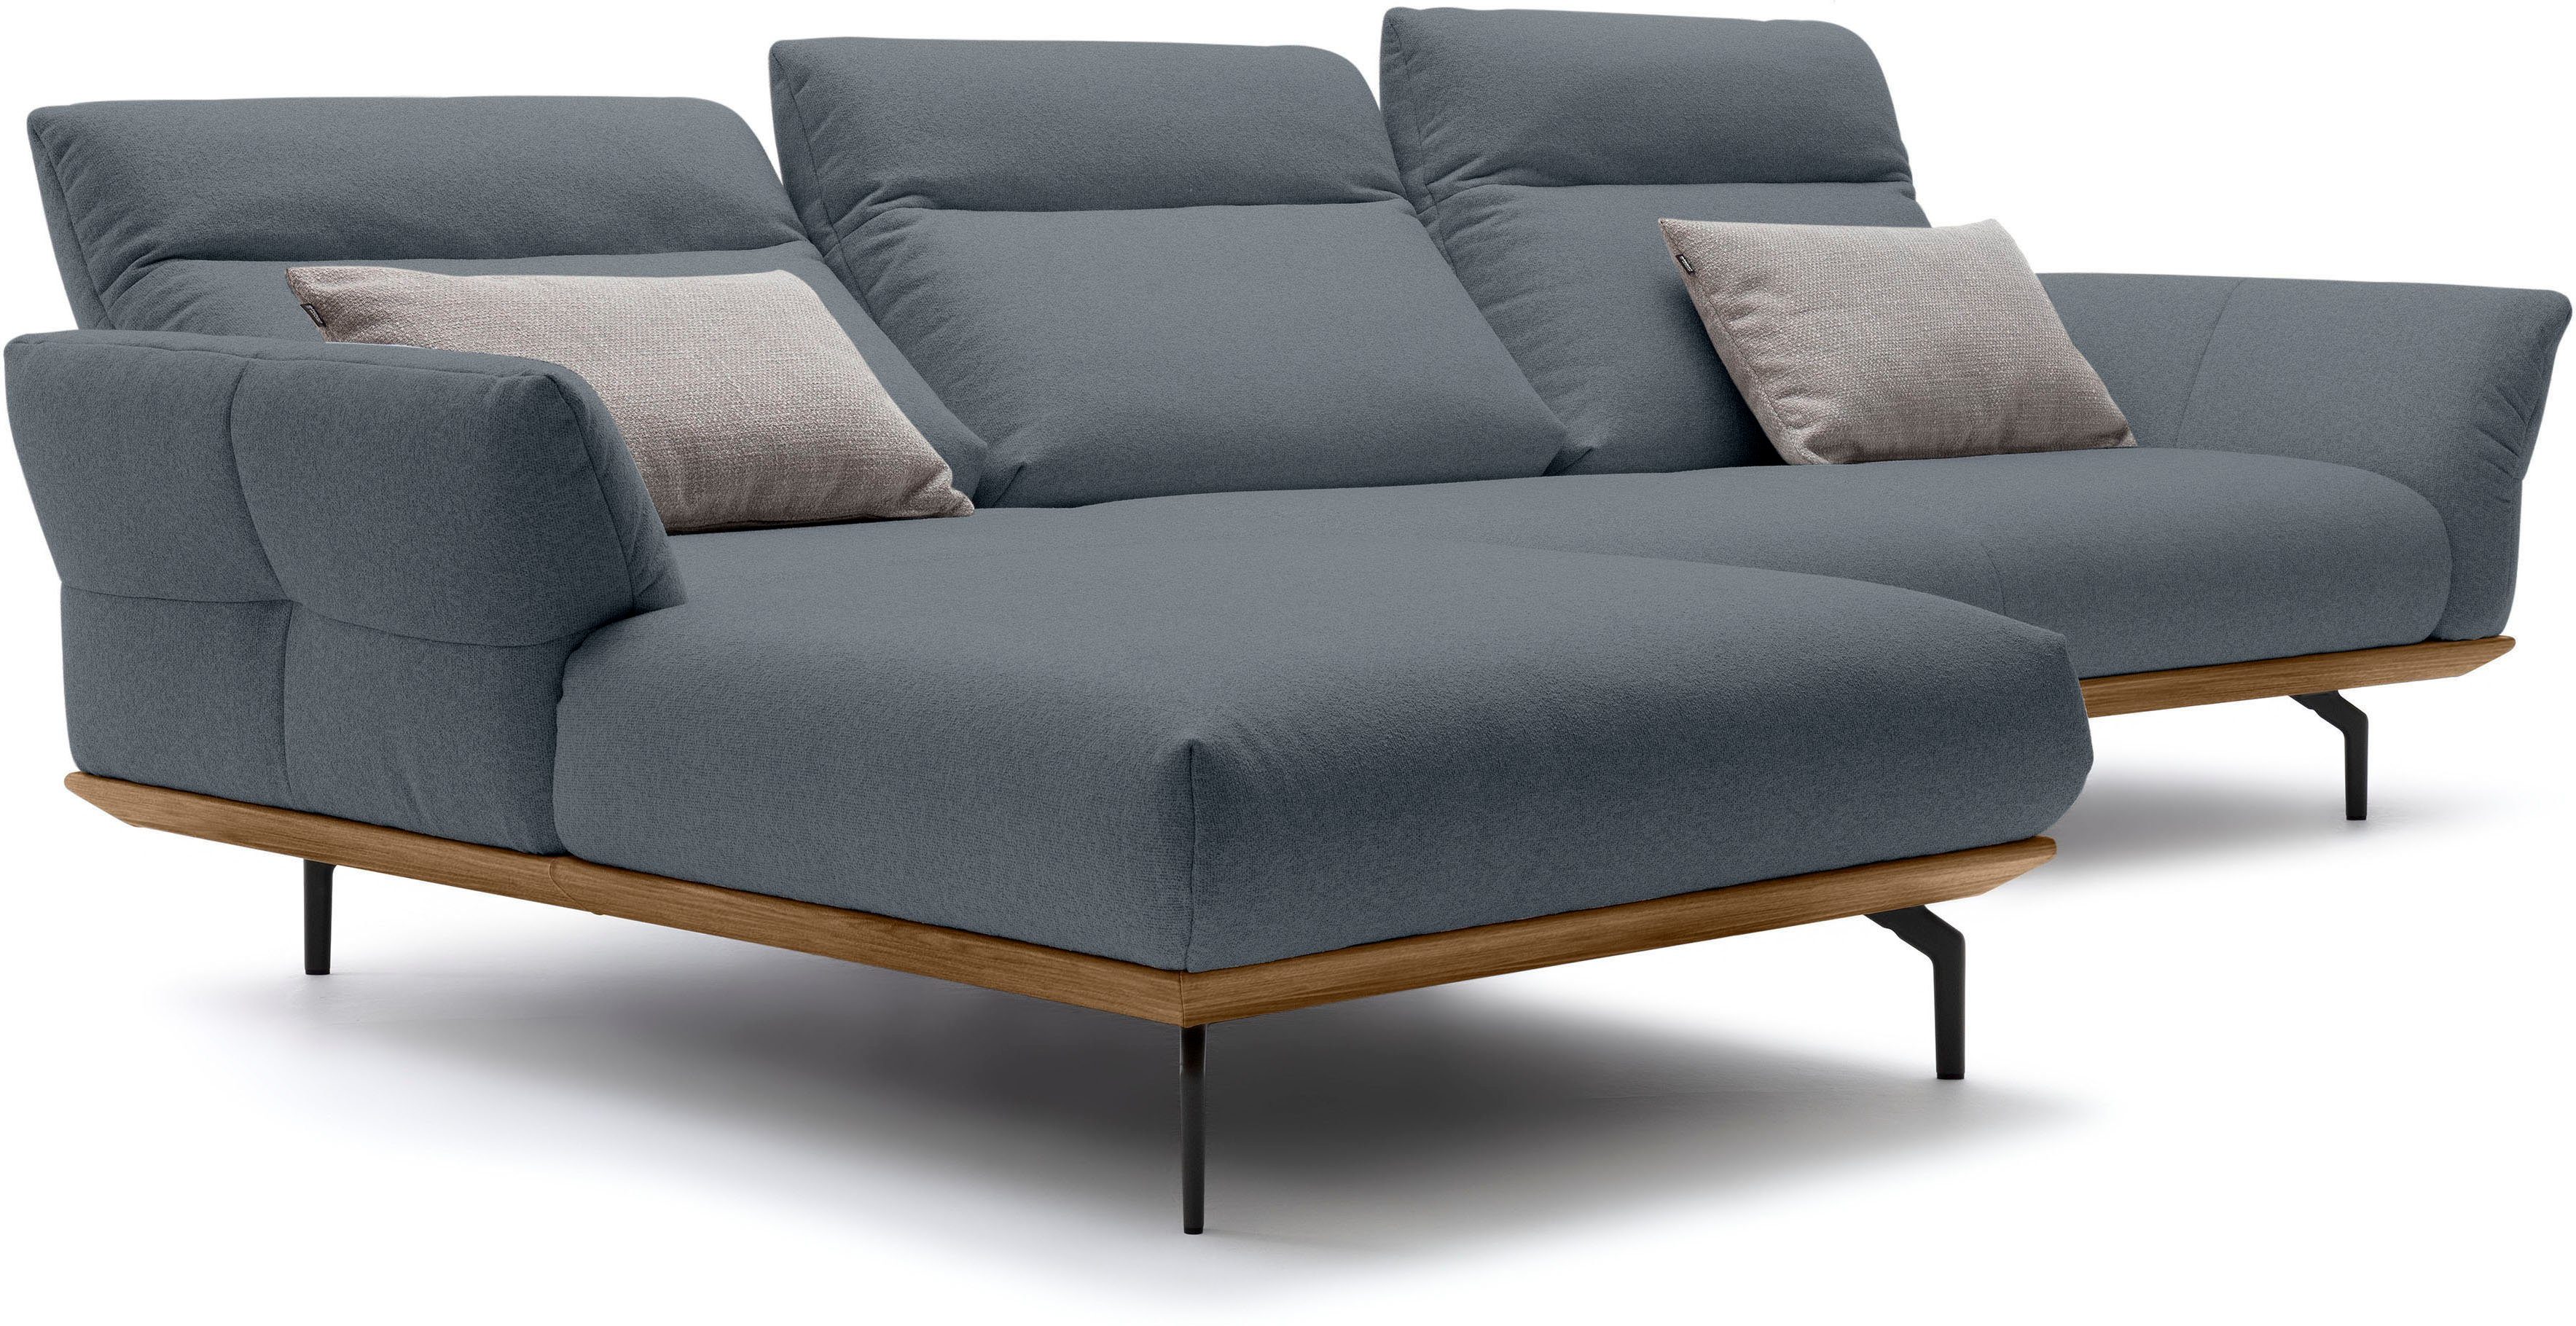 hülsta sofa Ecksofa hs.460, Nussbaum, cm in Breite 318 Umbragrau, Winkelfüße in Sockel